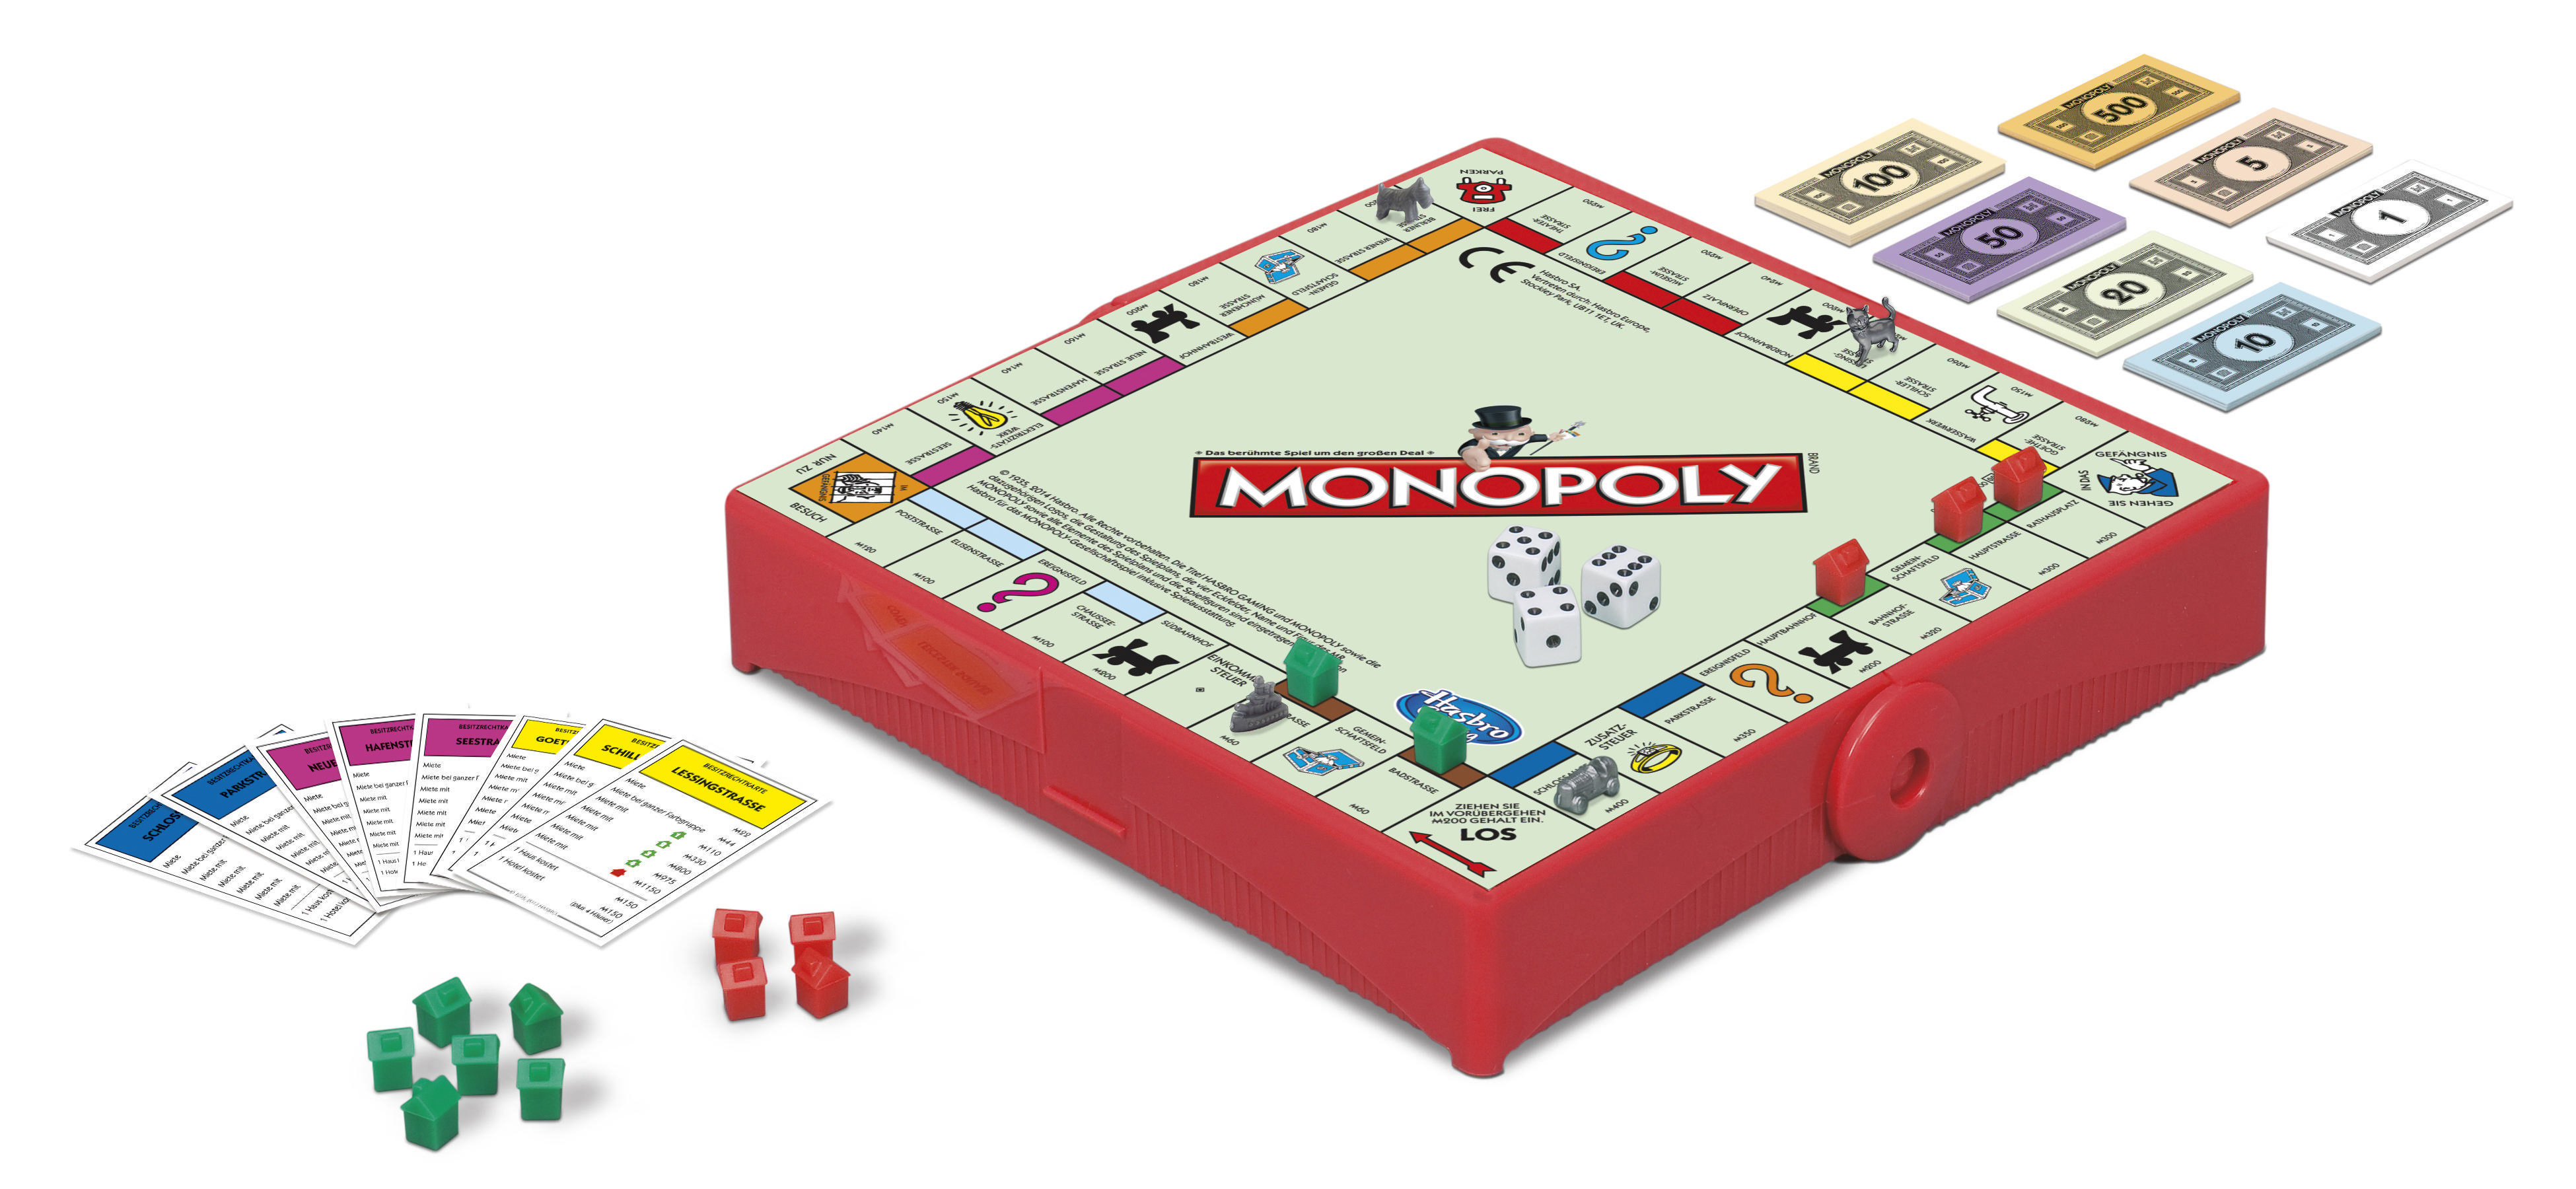 Kompakt Monopoly GAMING HASBRO Gesellschaftsspiel Mehrfarbig